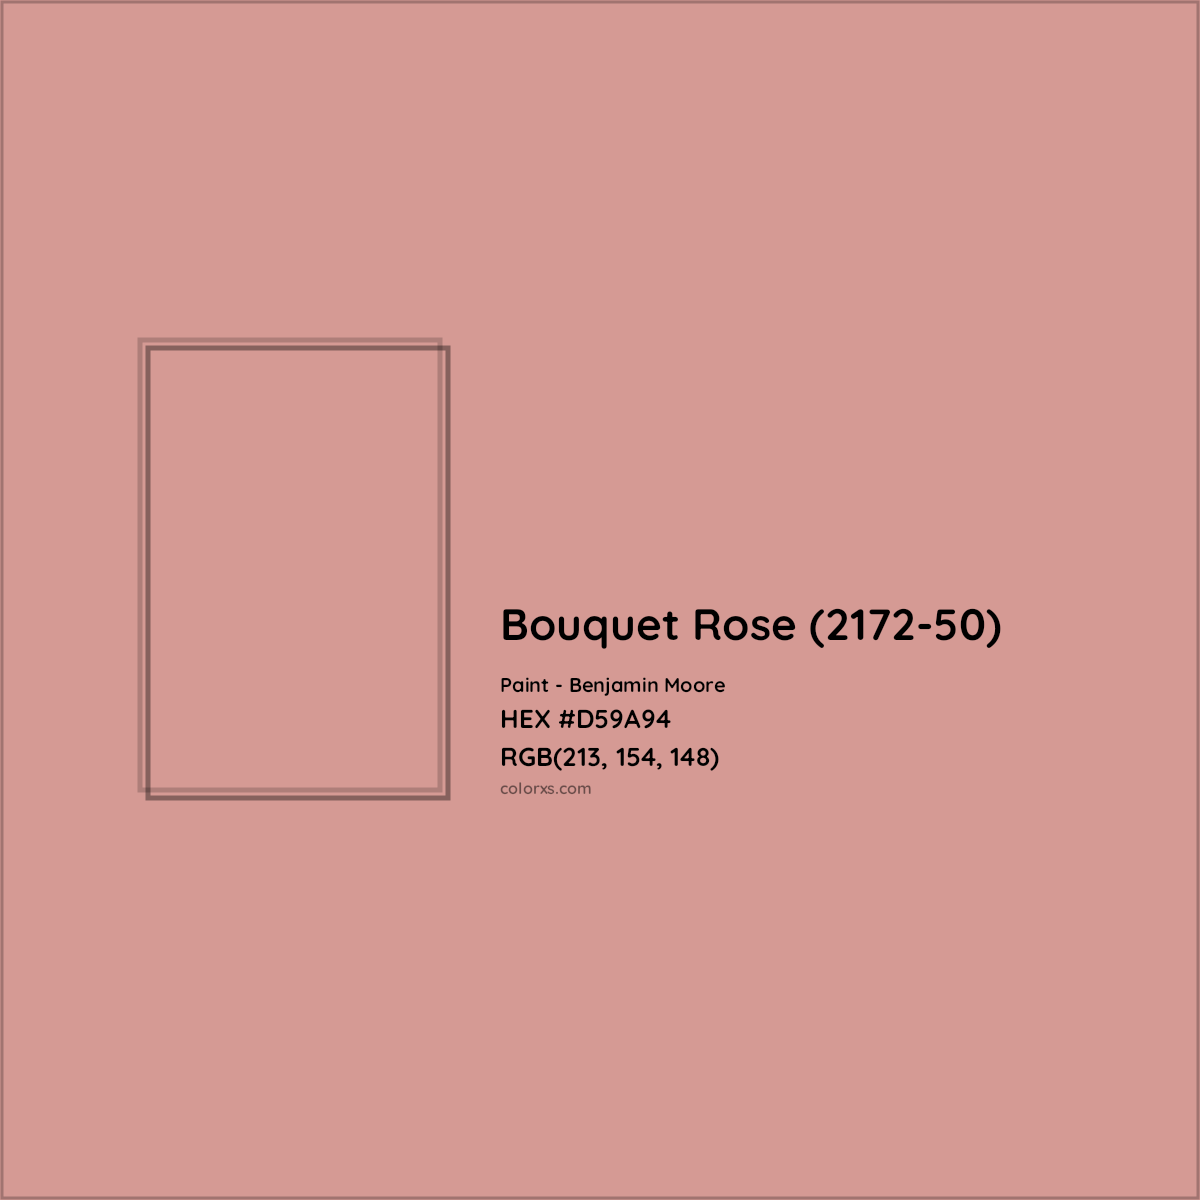 HEX #D59A94 Bouquet Rose (2172-50) Paint Benjamin Moore - Color Code